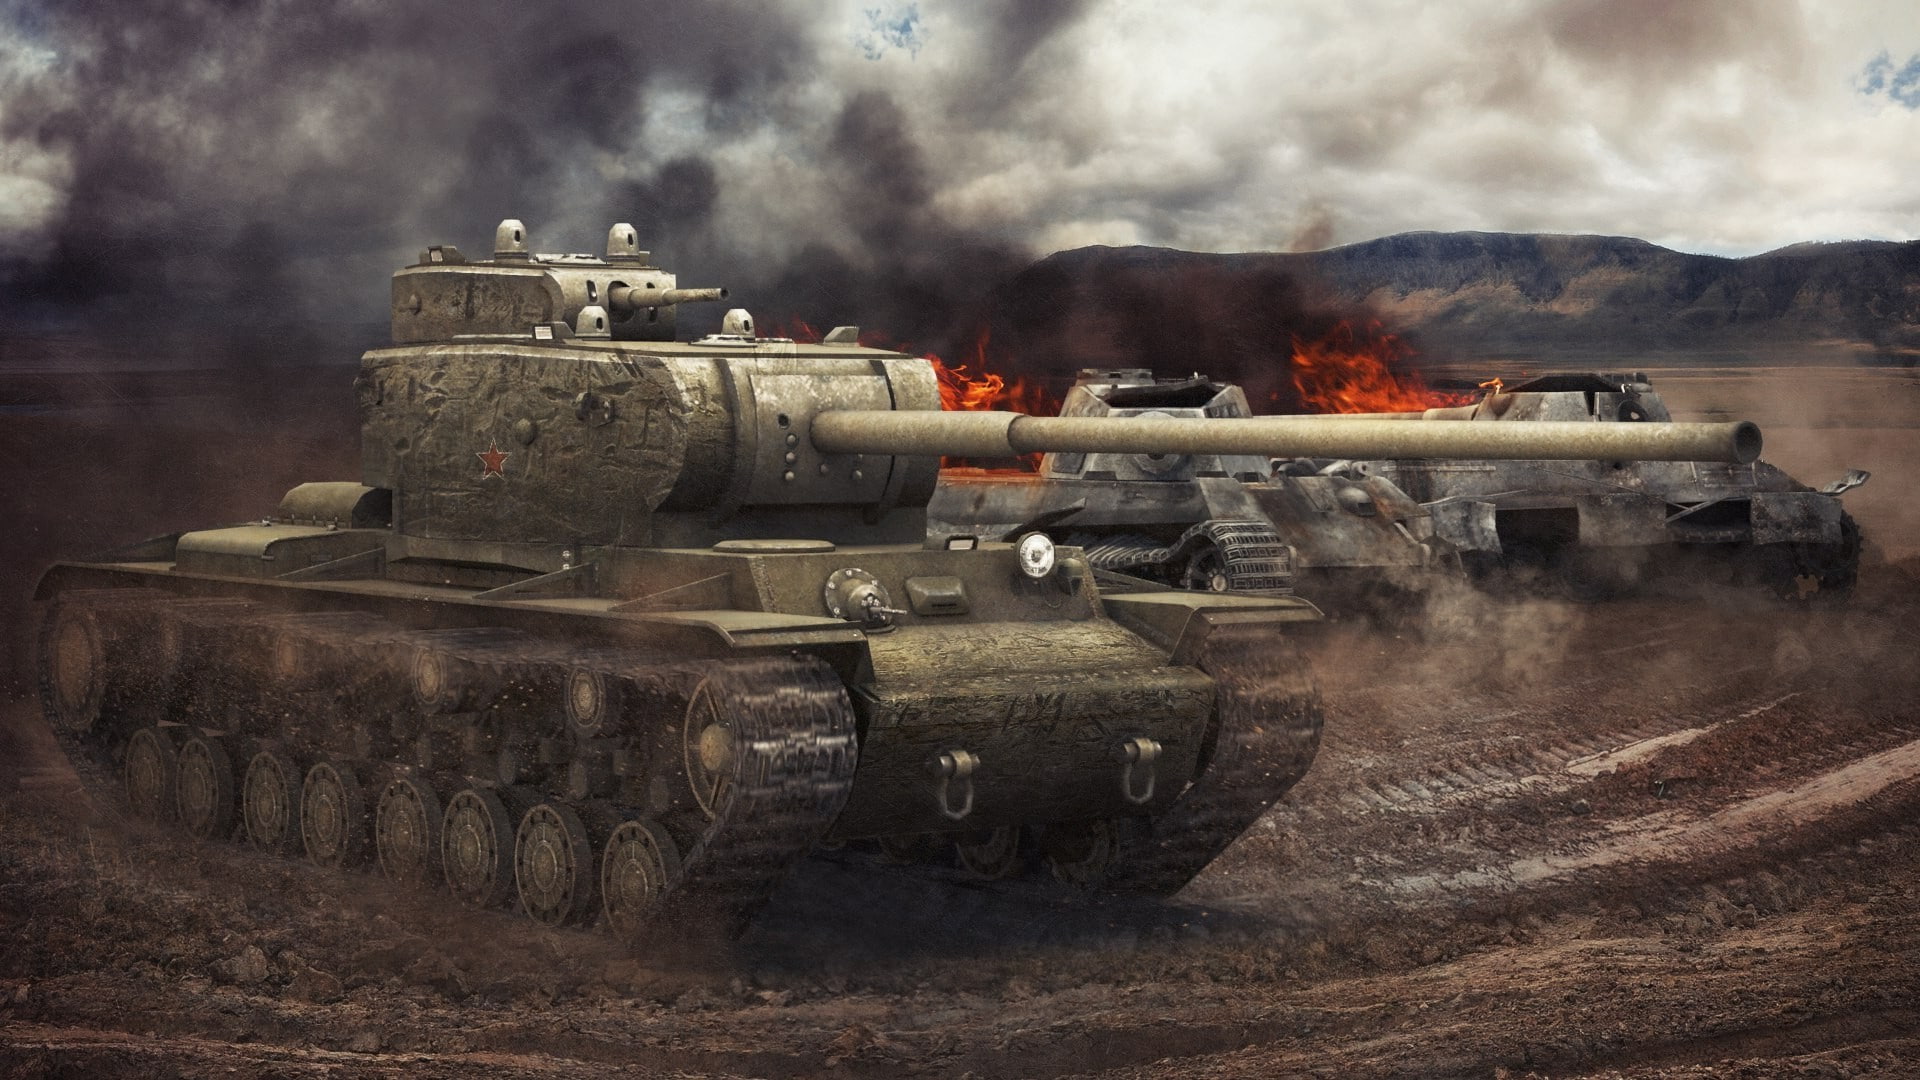 world of tanks wargaming video games kv 4, smoke - physical structure